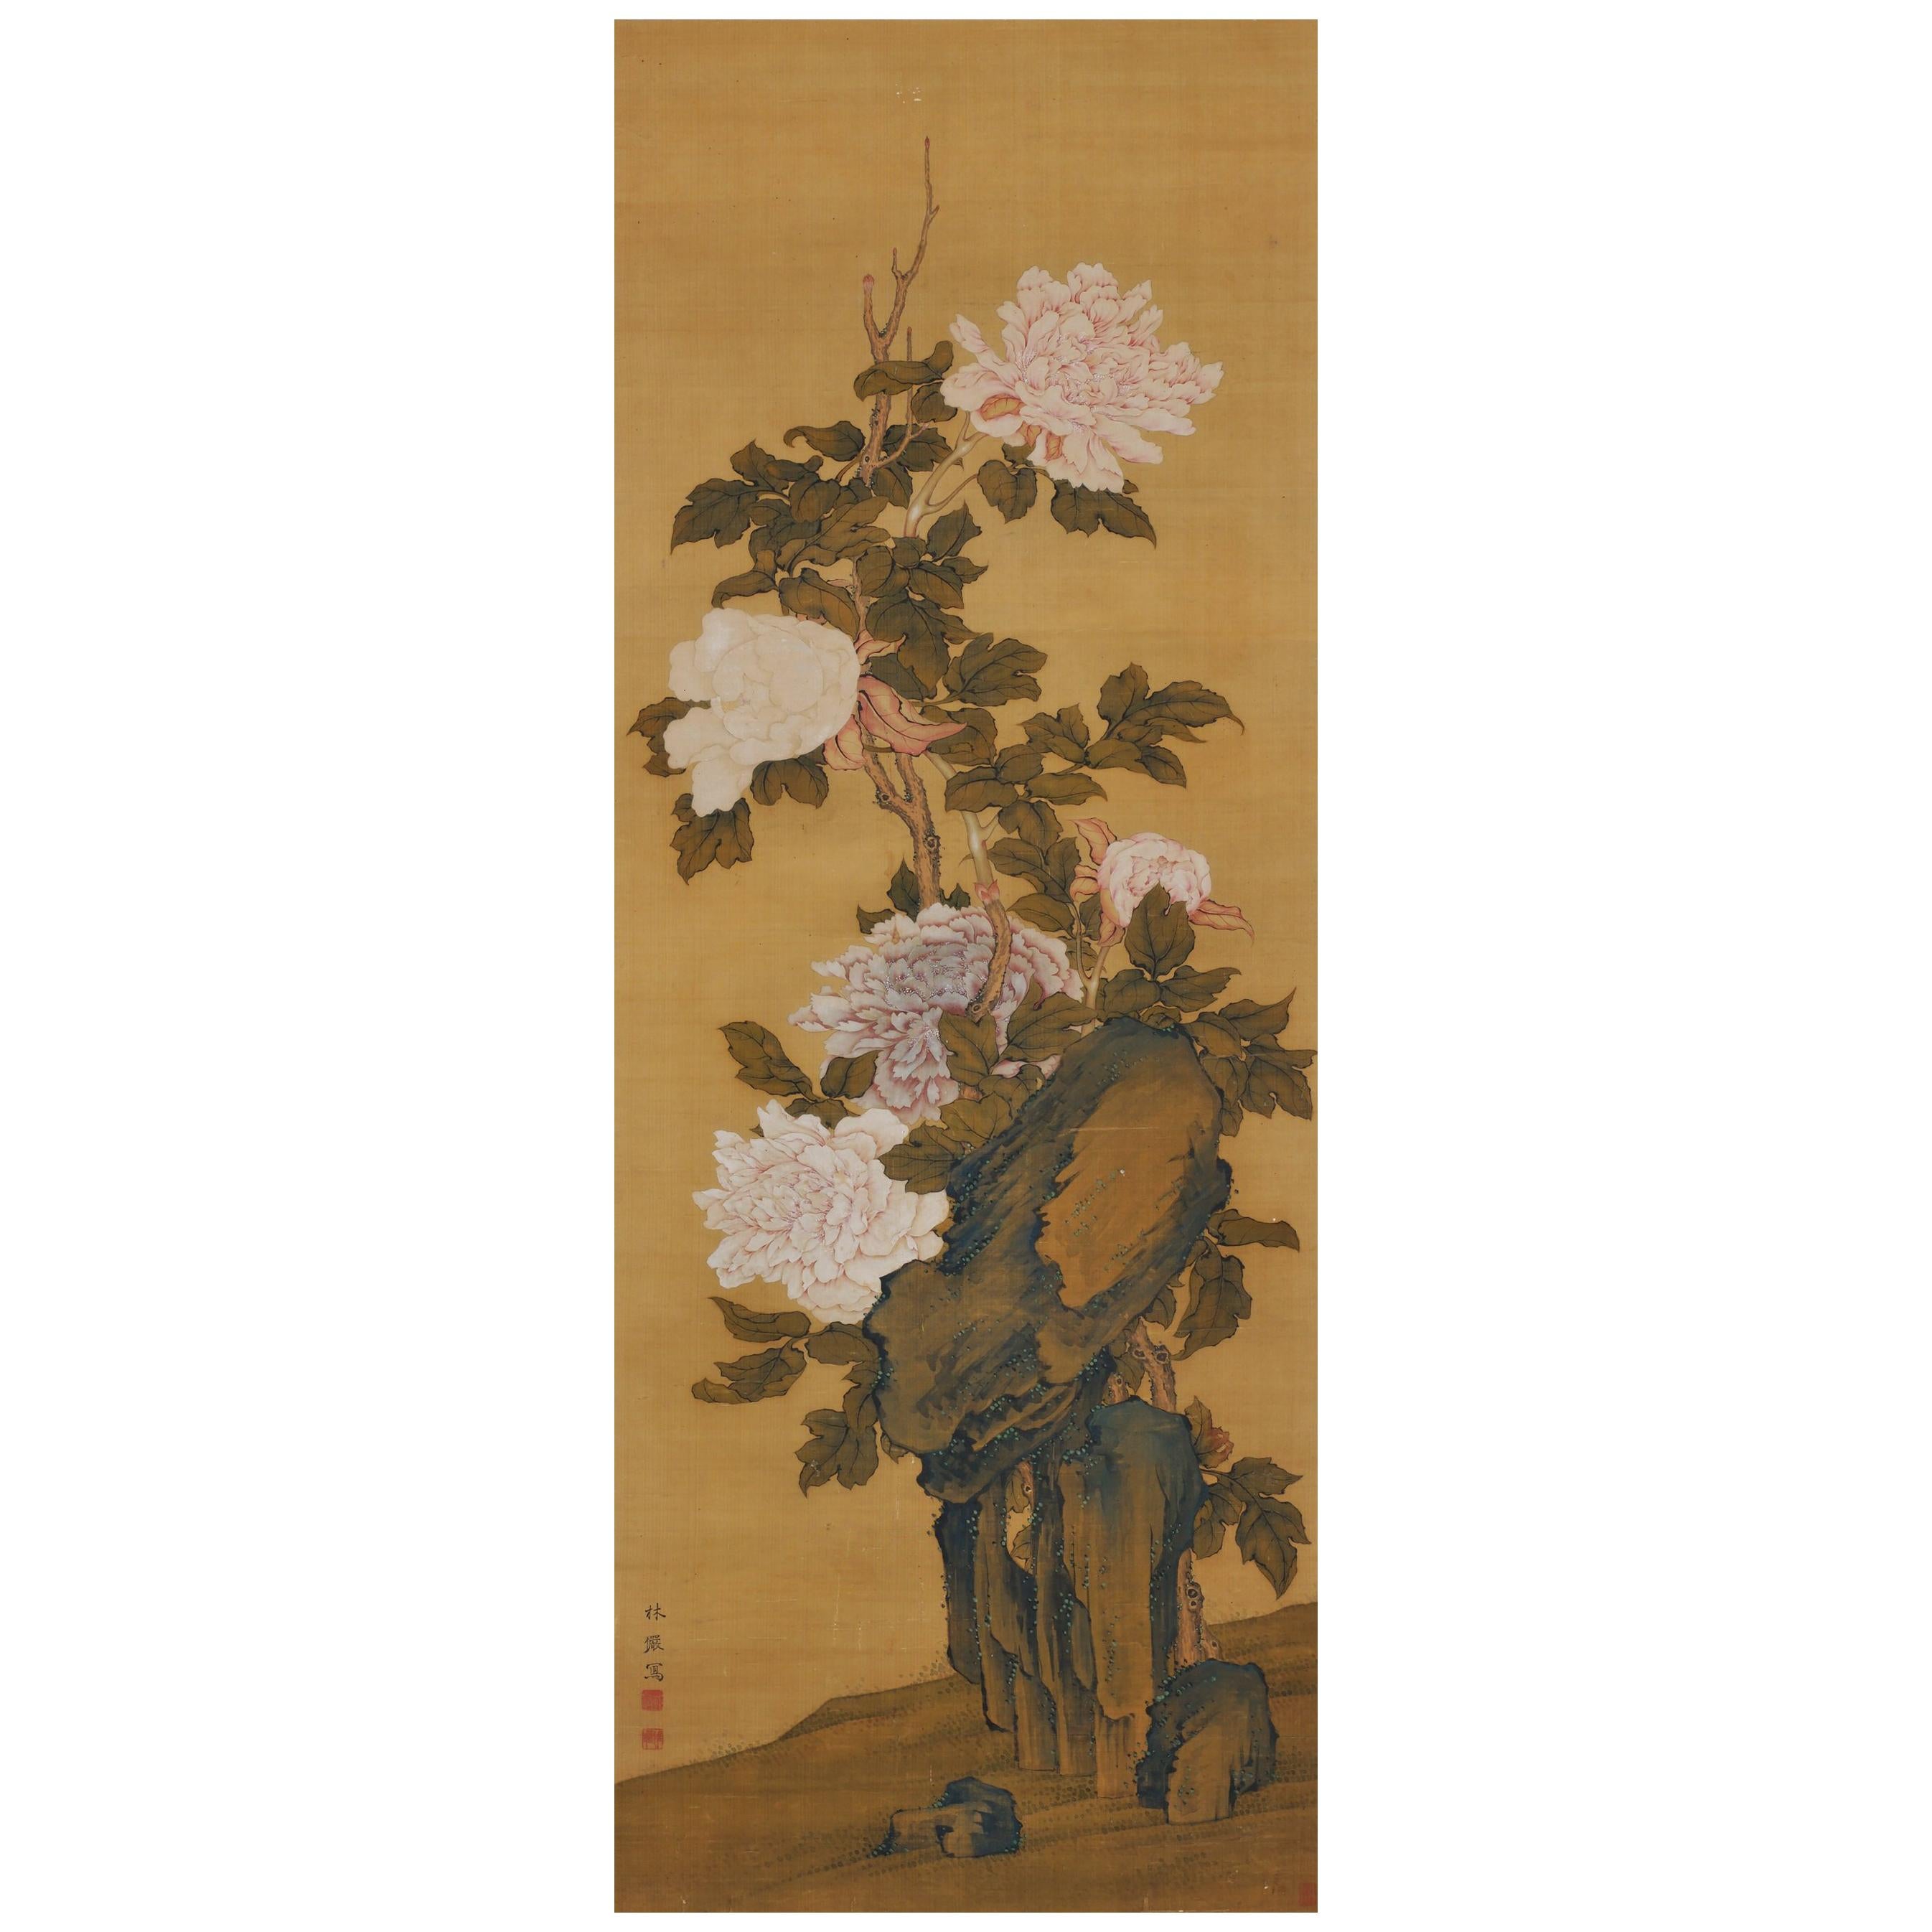 19th Century Japanese Scroll Painting. Peonies. Hayashi Chisen, Nanpin School